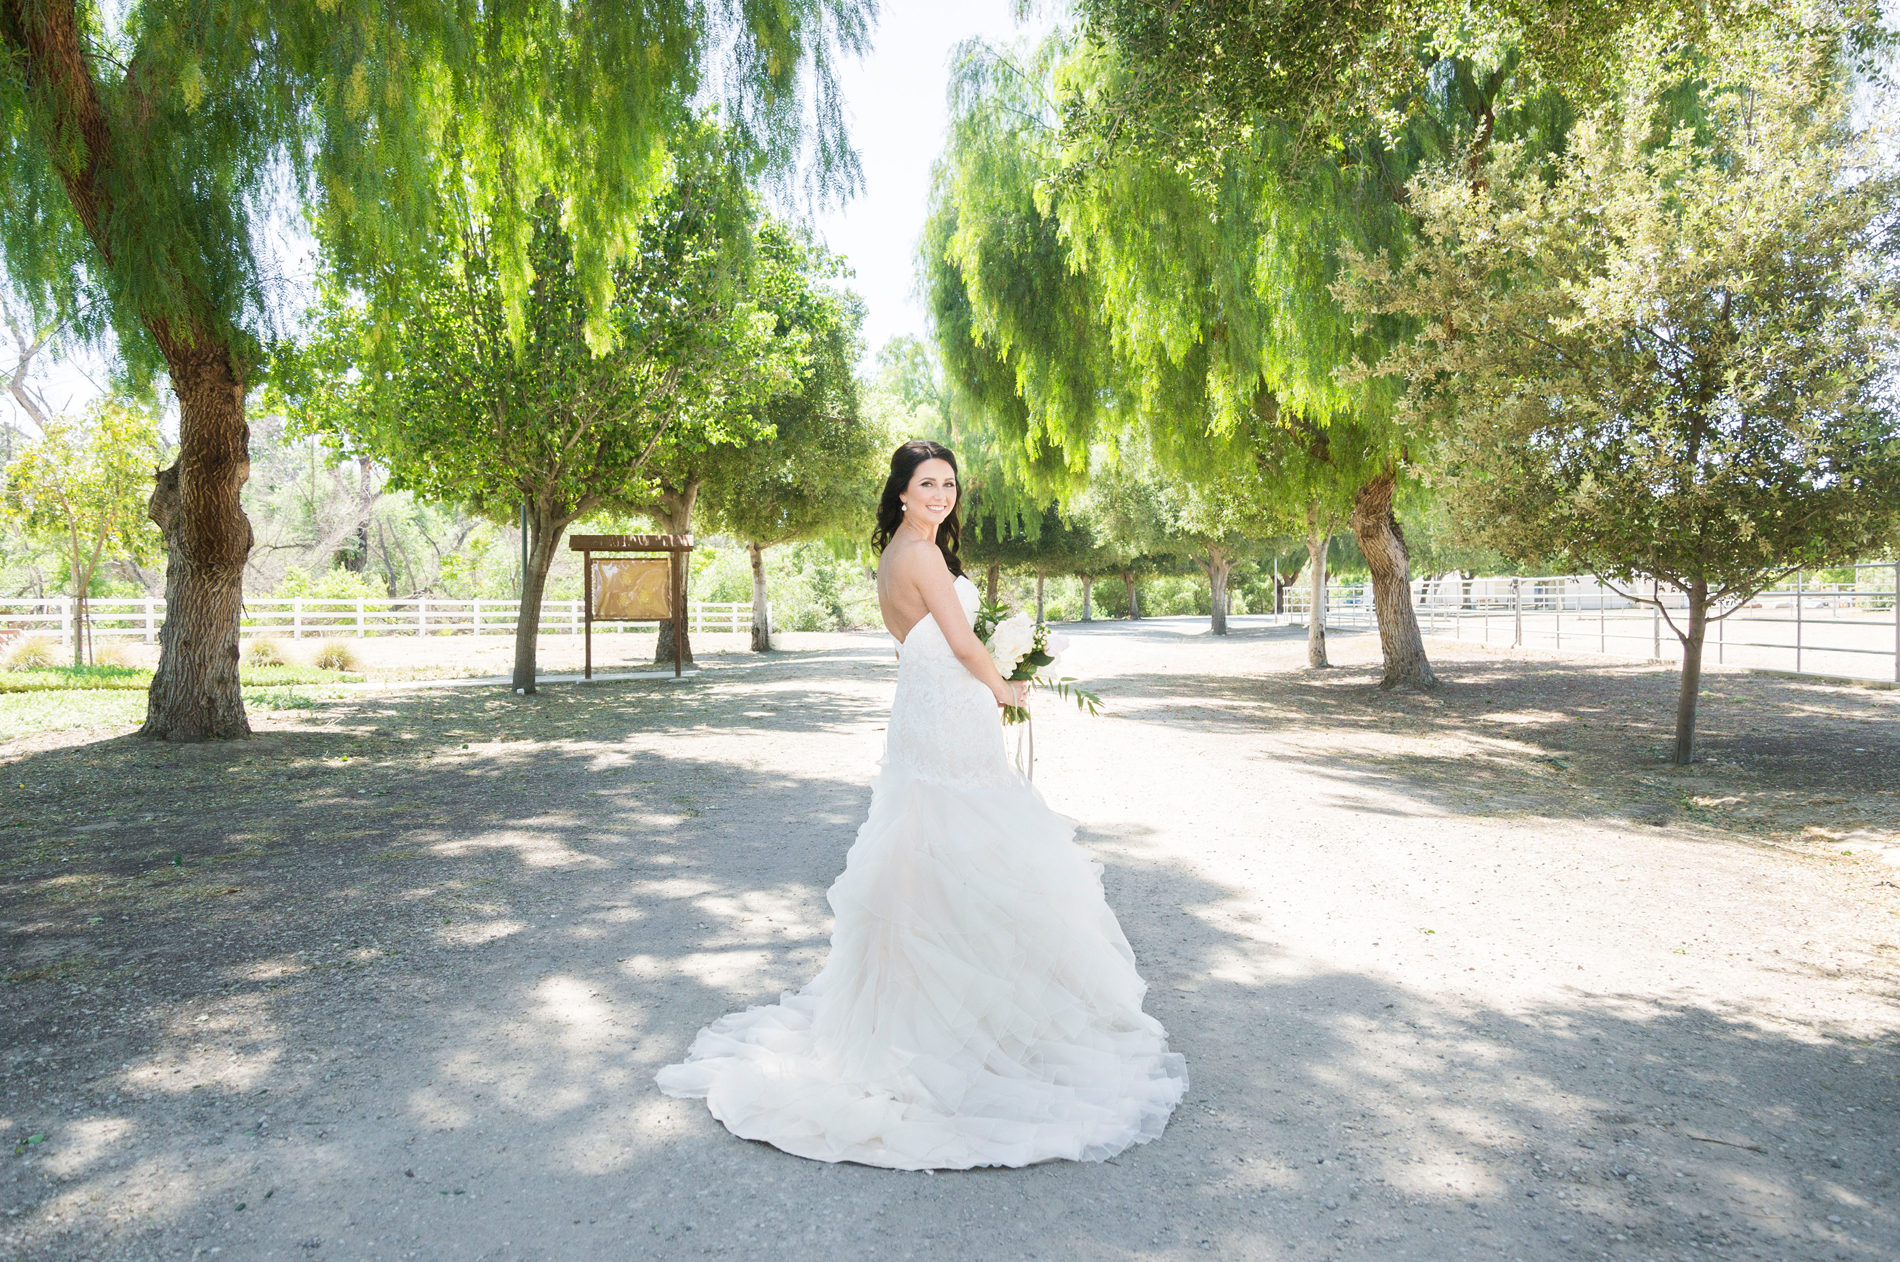 Mermaid Lace Wedding Dress - A McCoy Equestrian Center Wedding - Peterson Design & Photography